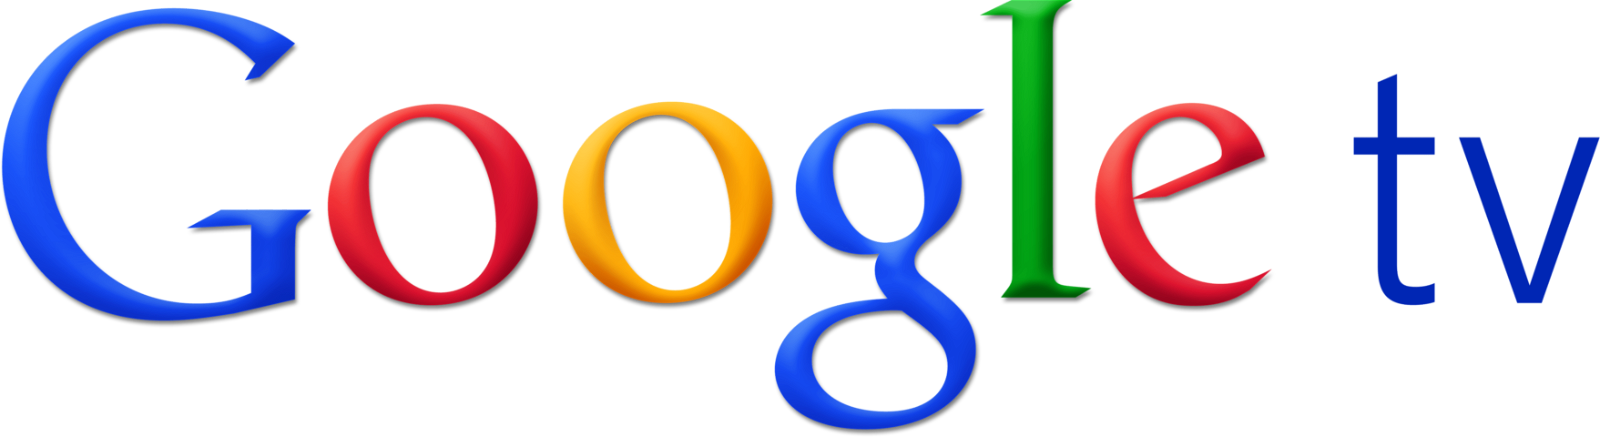 Google TV Logo High Res.png